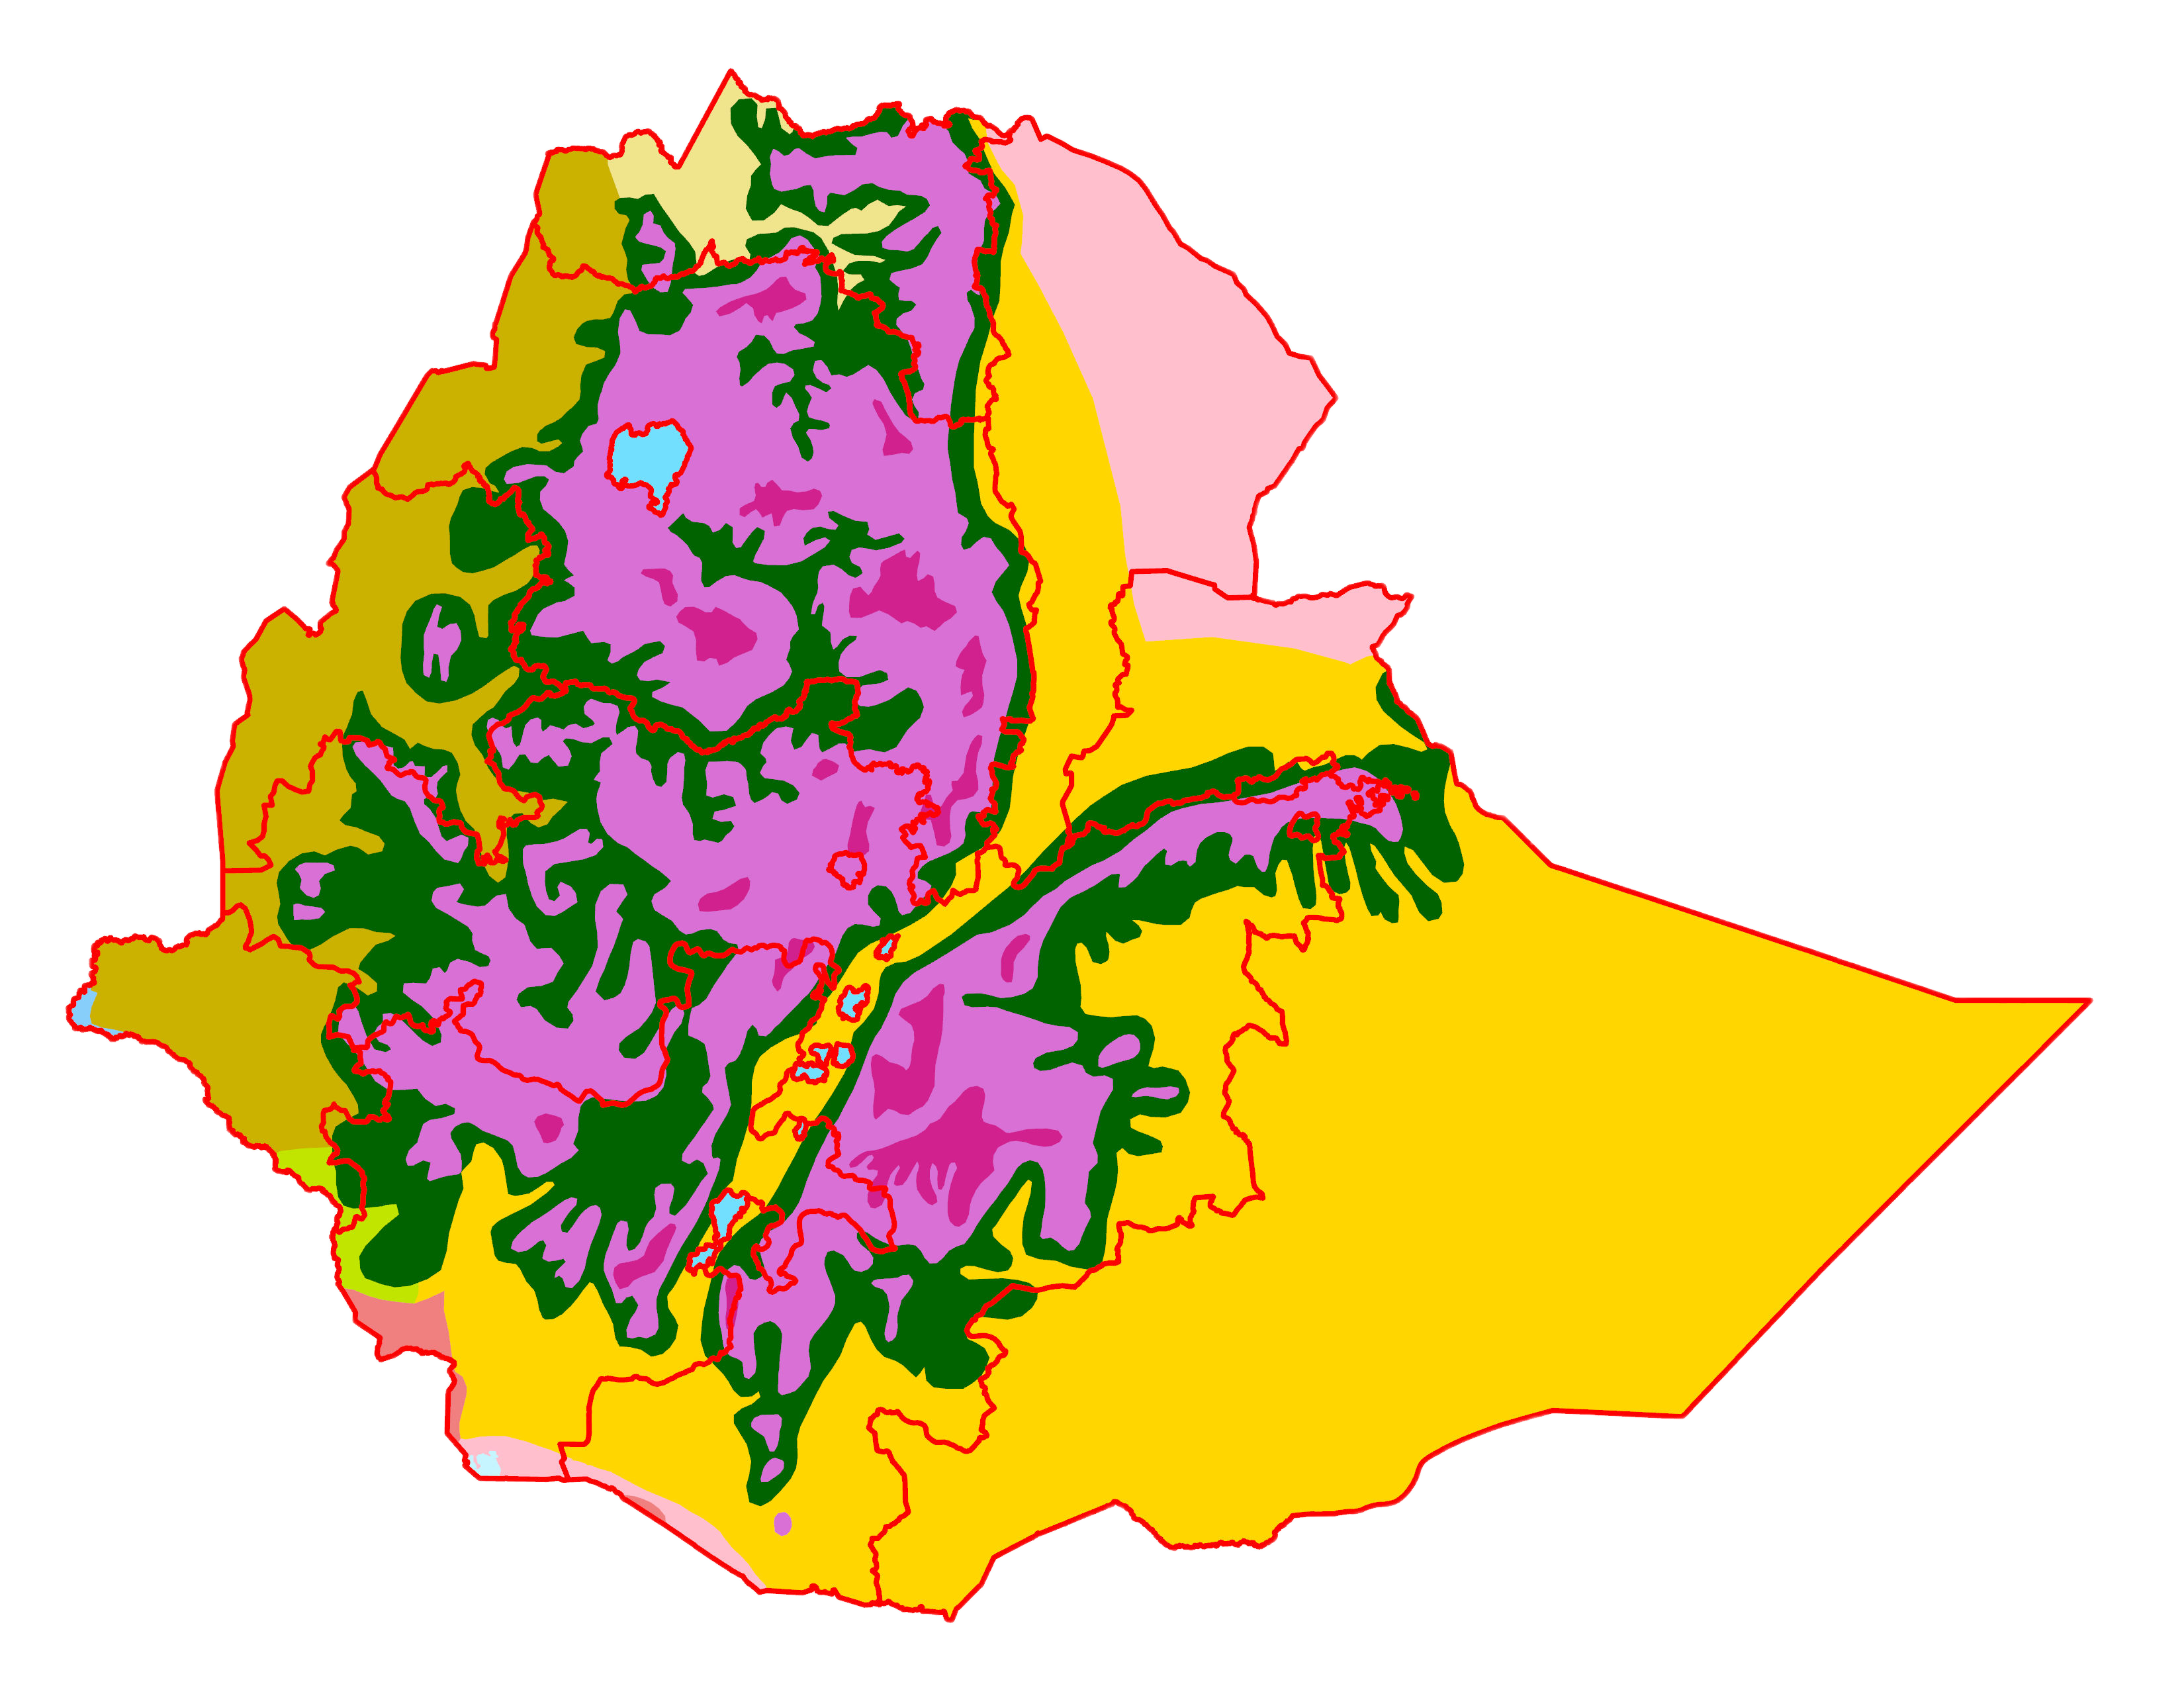 Ethiopia First Admin level over Ecoregions